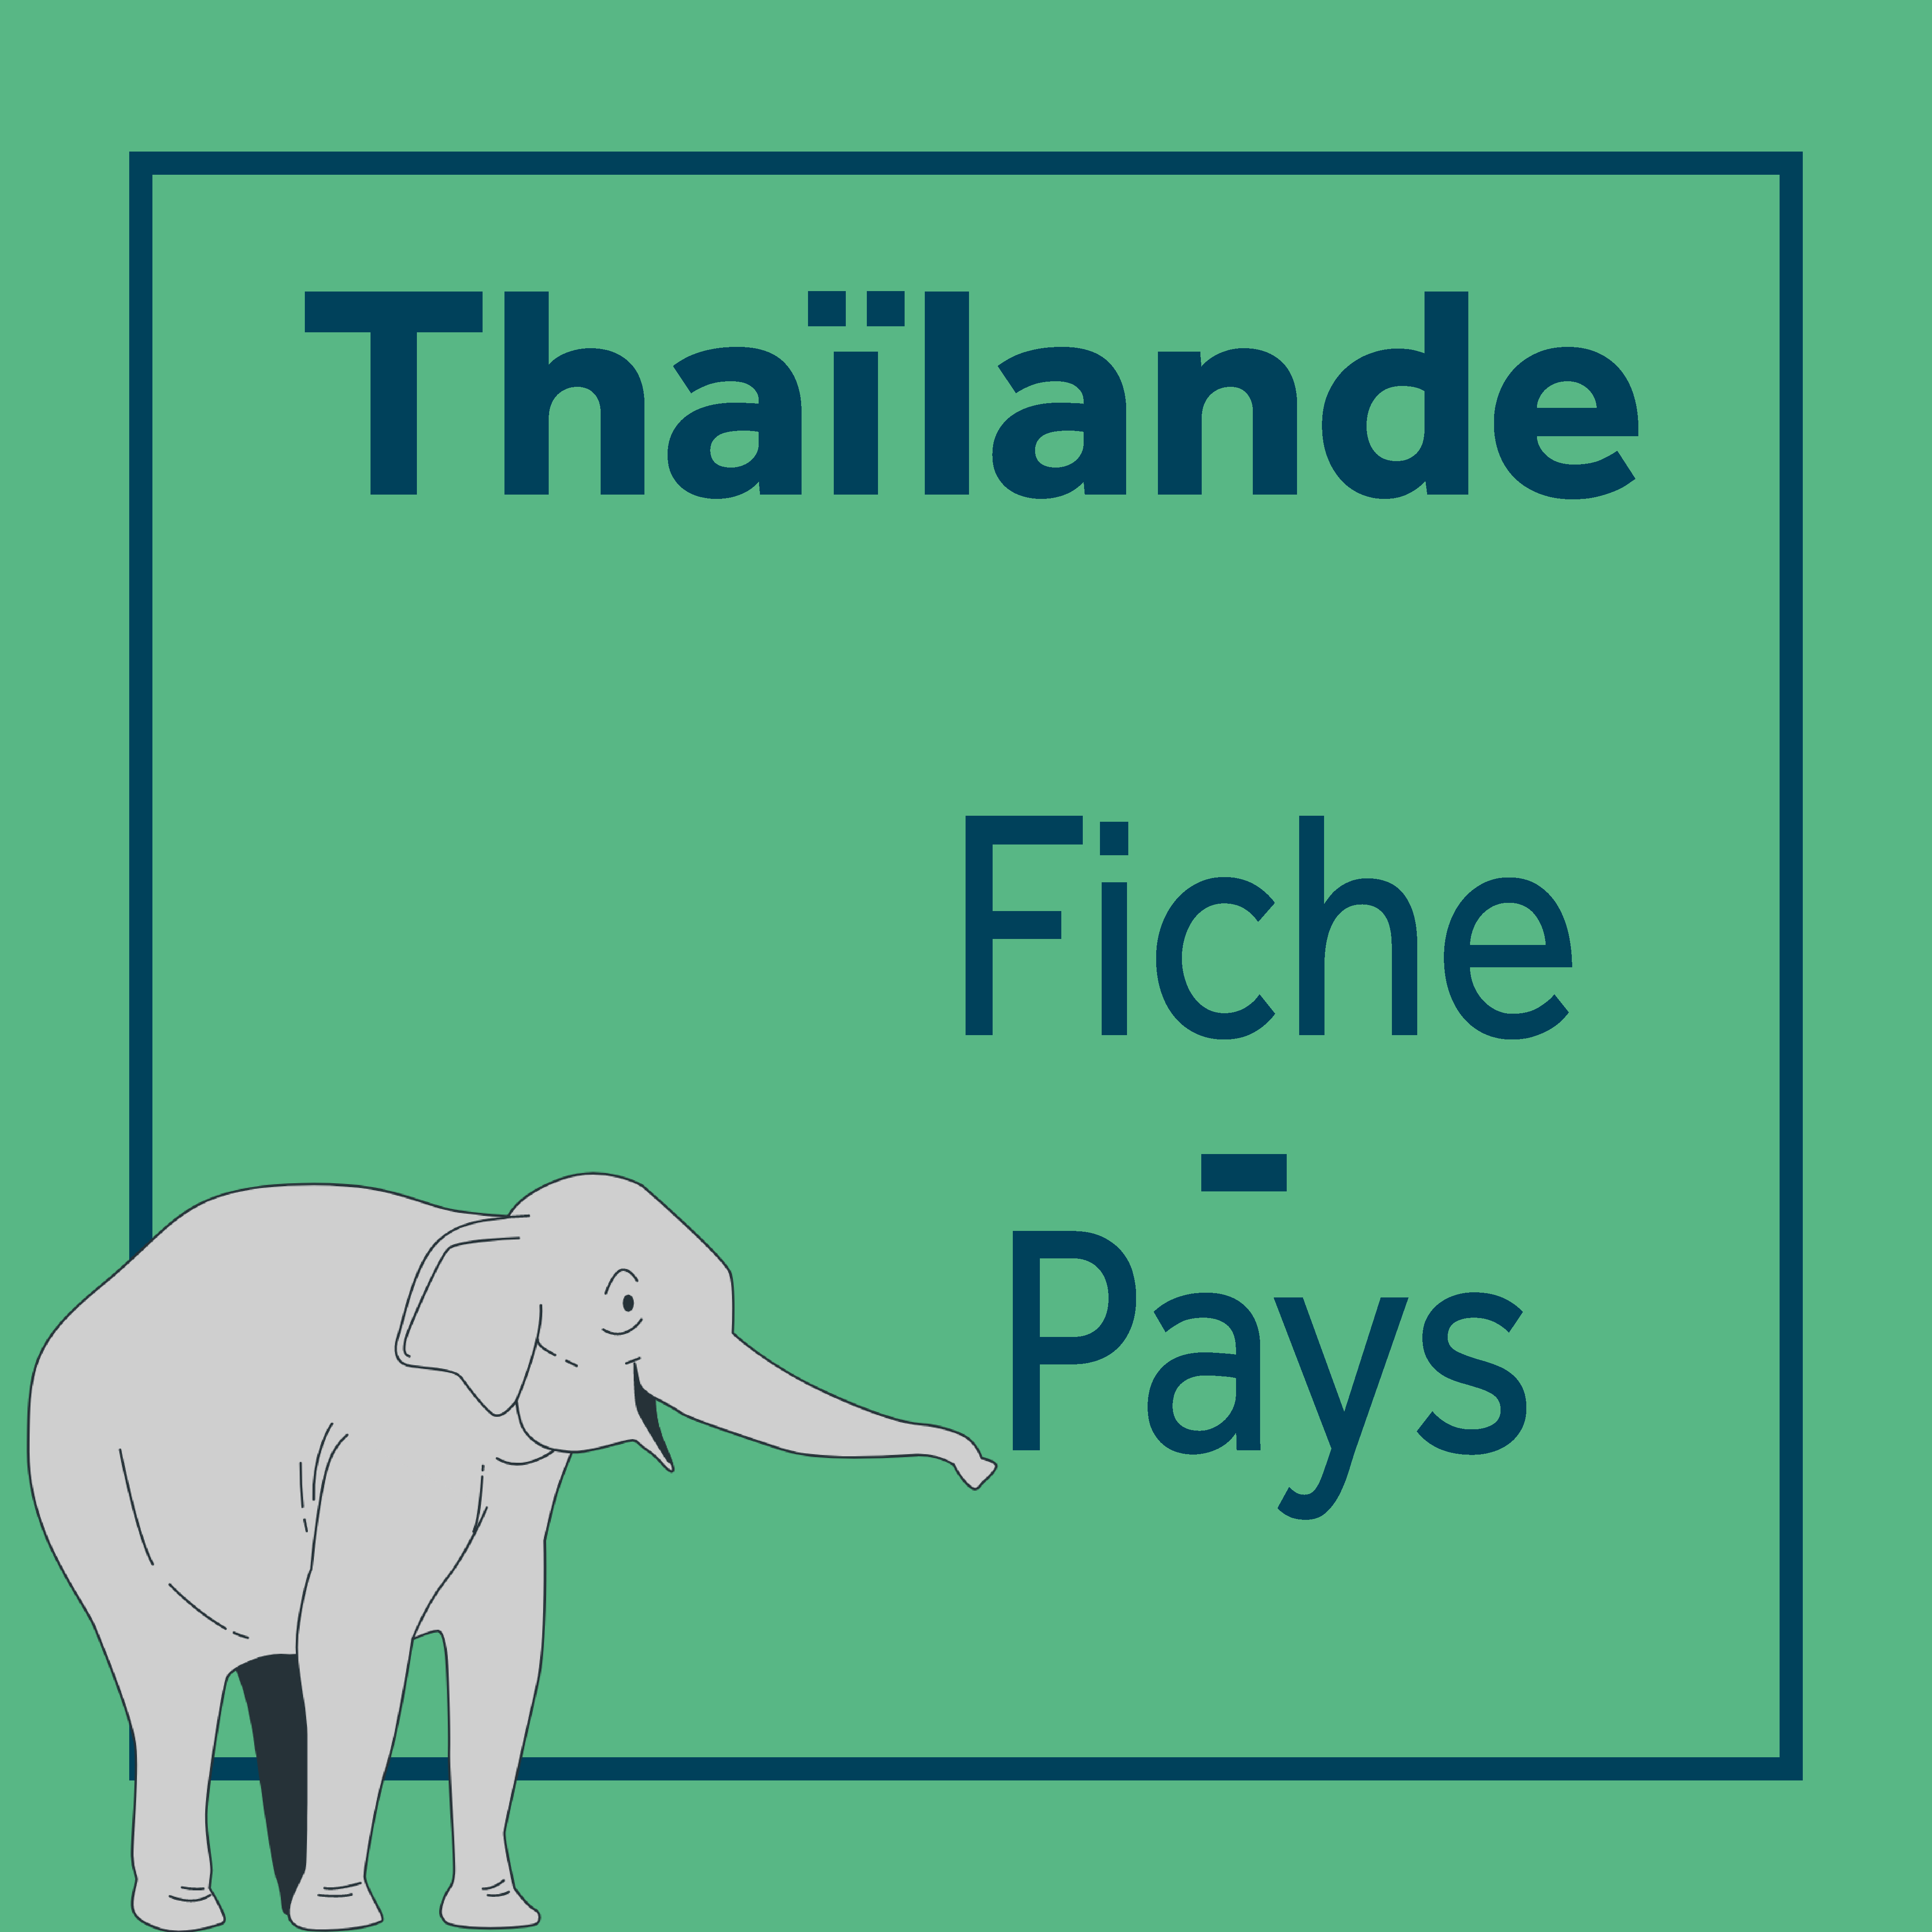 fiche pays Thaïlande